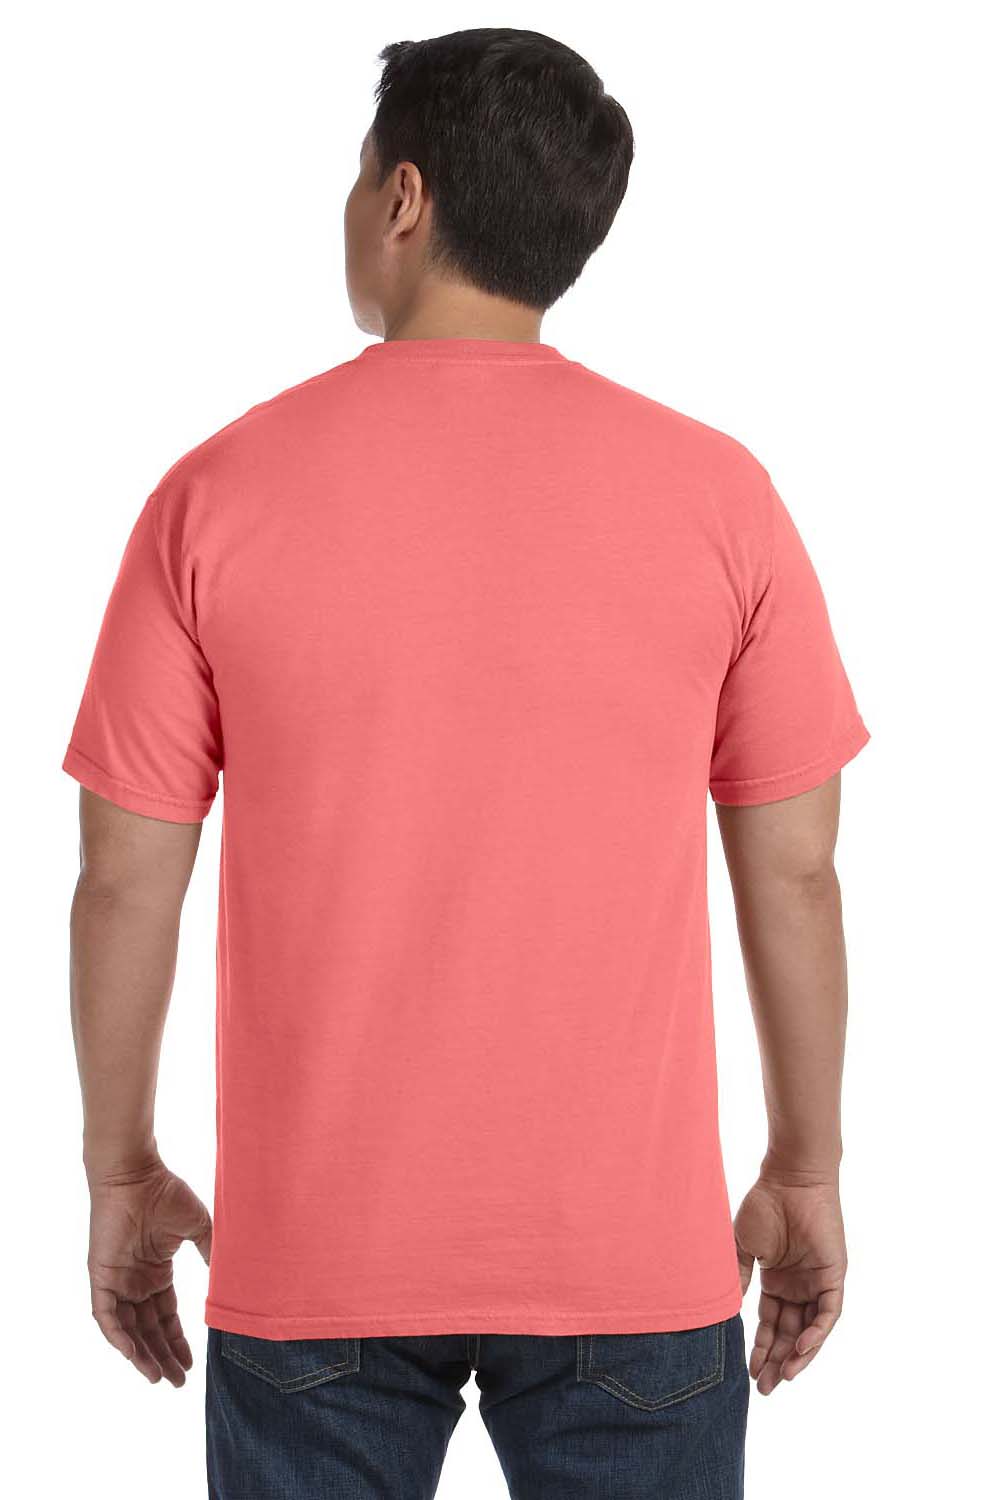 Comfort Colors C1717 Mens Short Sleeve Crewneck T-Shirt Watermelon Pink Back